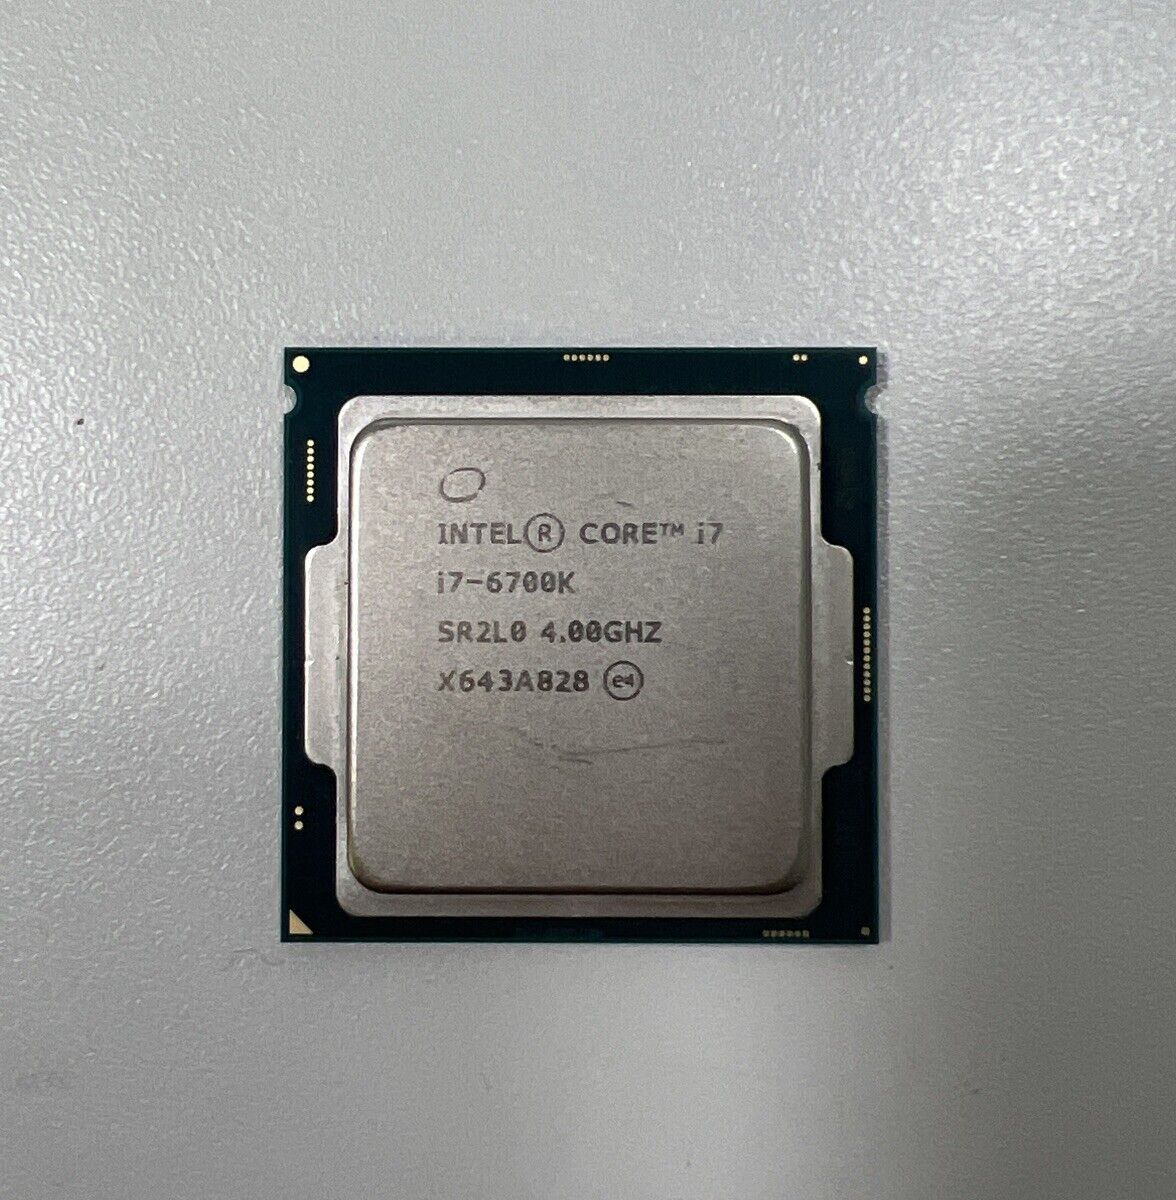 Intel Core i7-6700K SR2L0 4.00Ghz CPU Processor